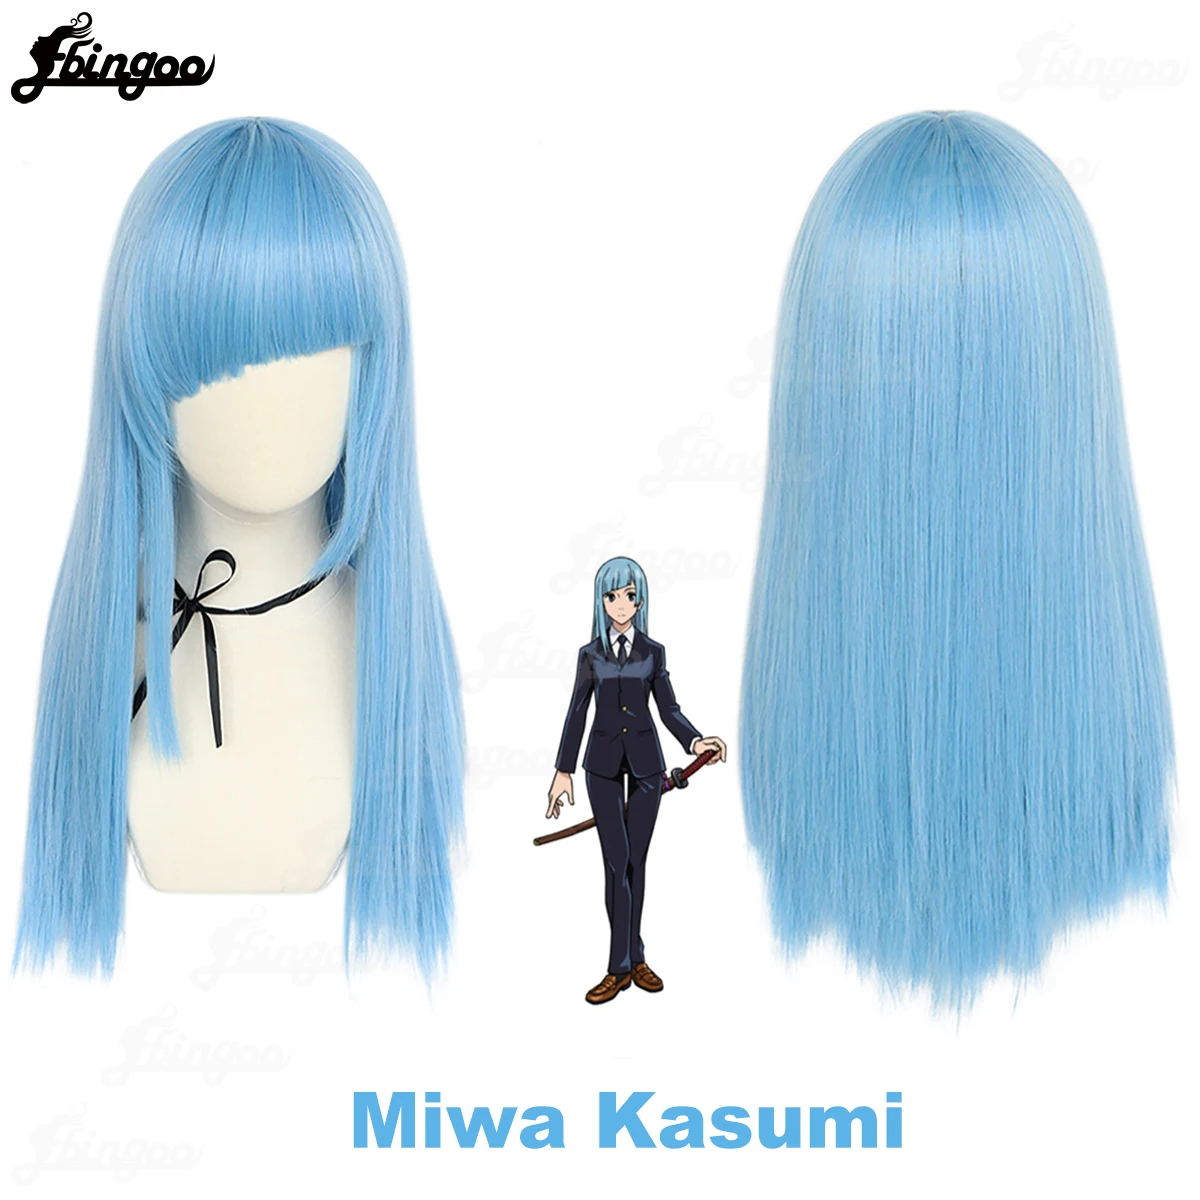 Ebingoo Synthetic Wig Jujutsu Kaisen Miwa Kasumi Cosplay Wigs Long Blue Straight with Bangs Hair Adult Carnival Halloween Party